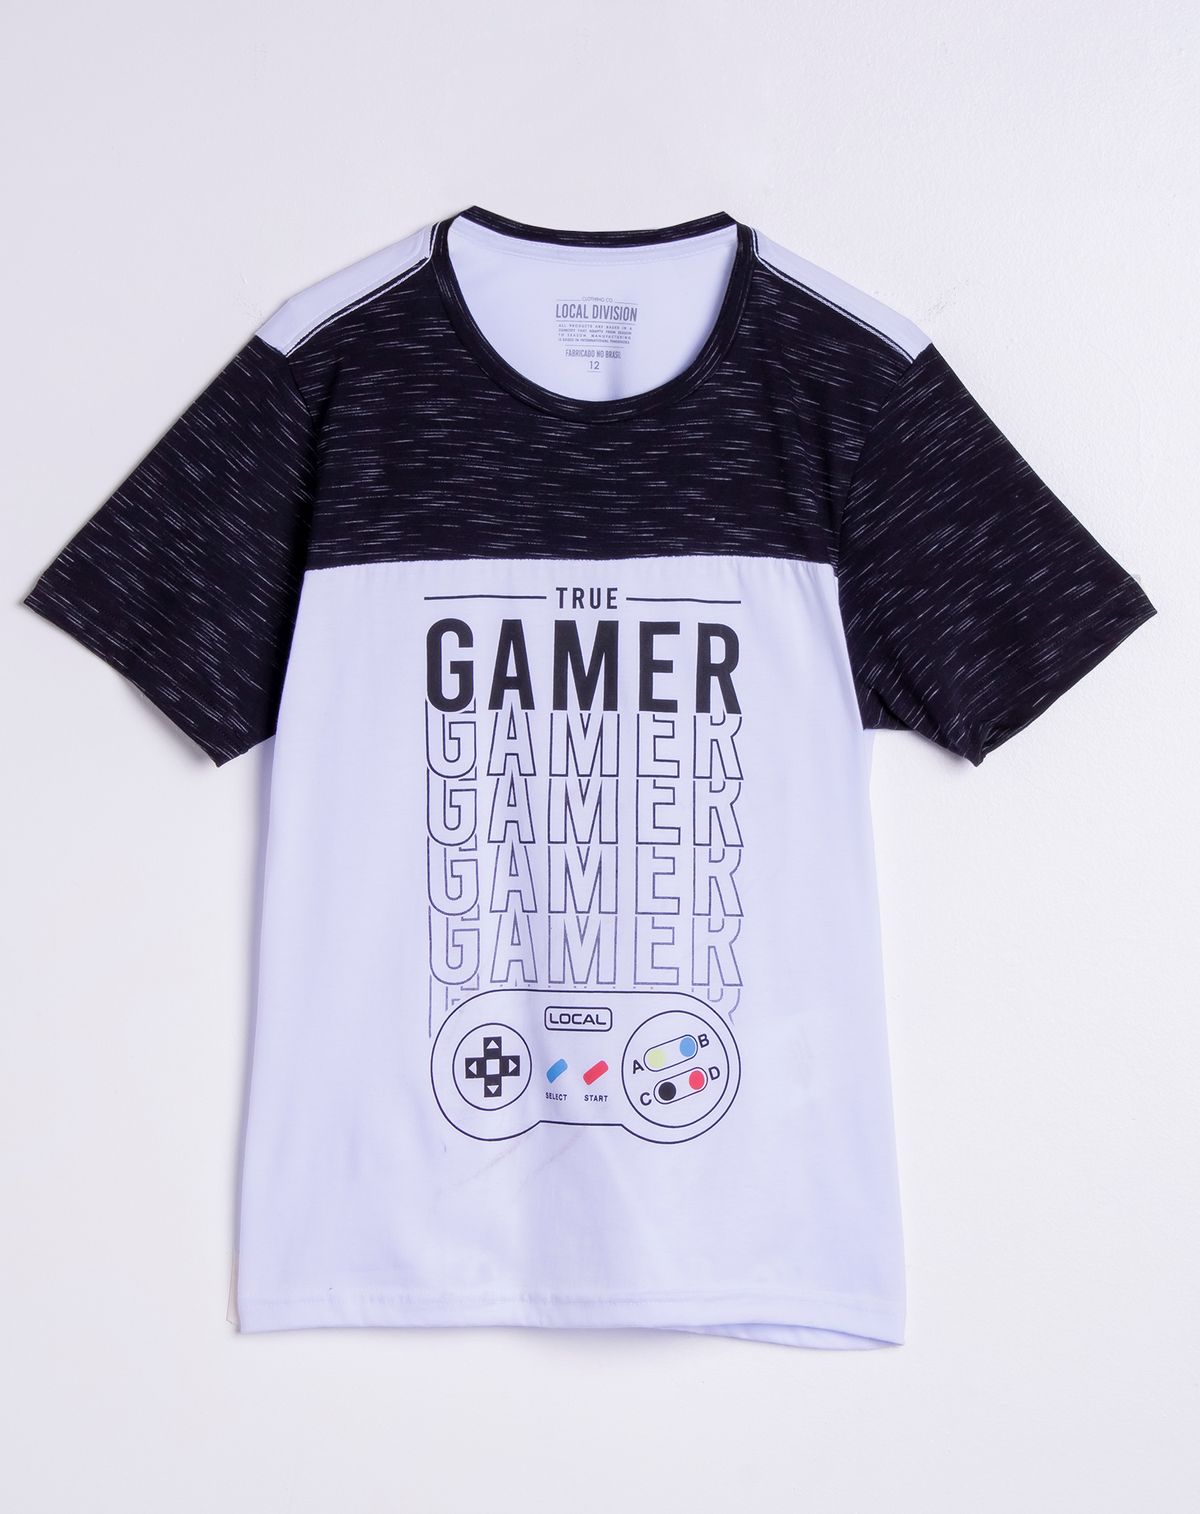 607486004-camiseta-manga-curta-juvenil-menino-true-gamer-branco-preto-16-3b5